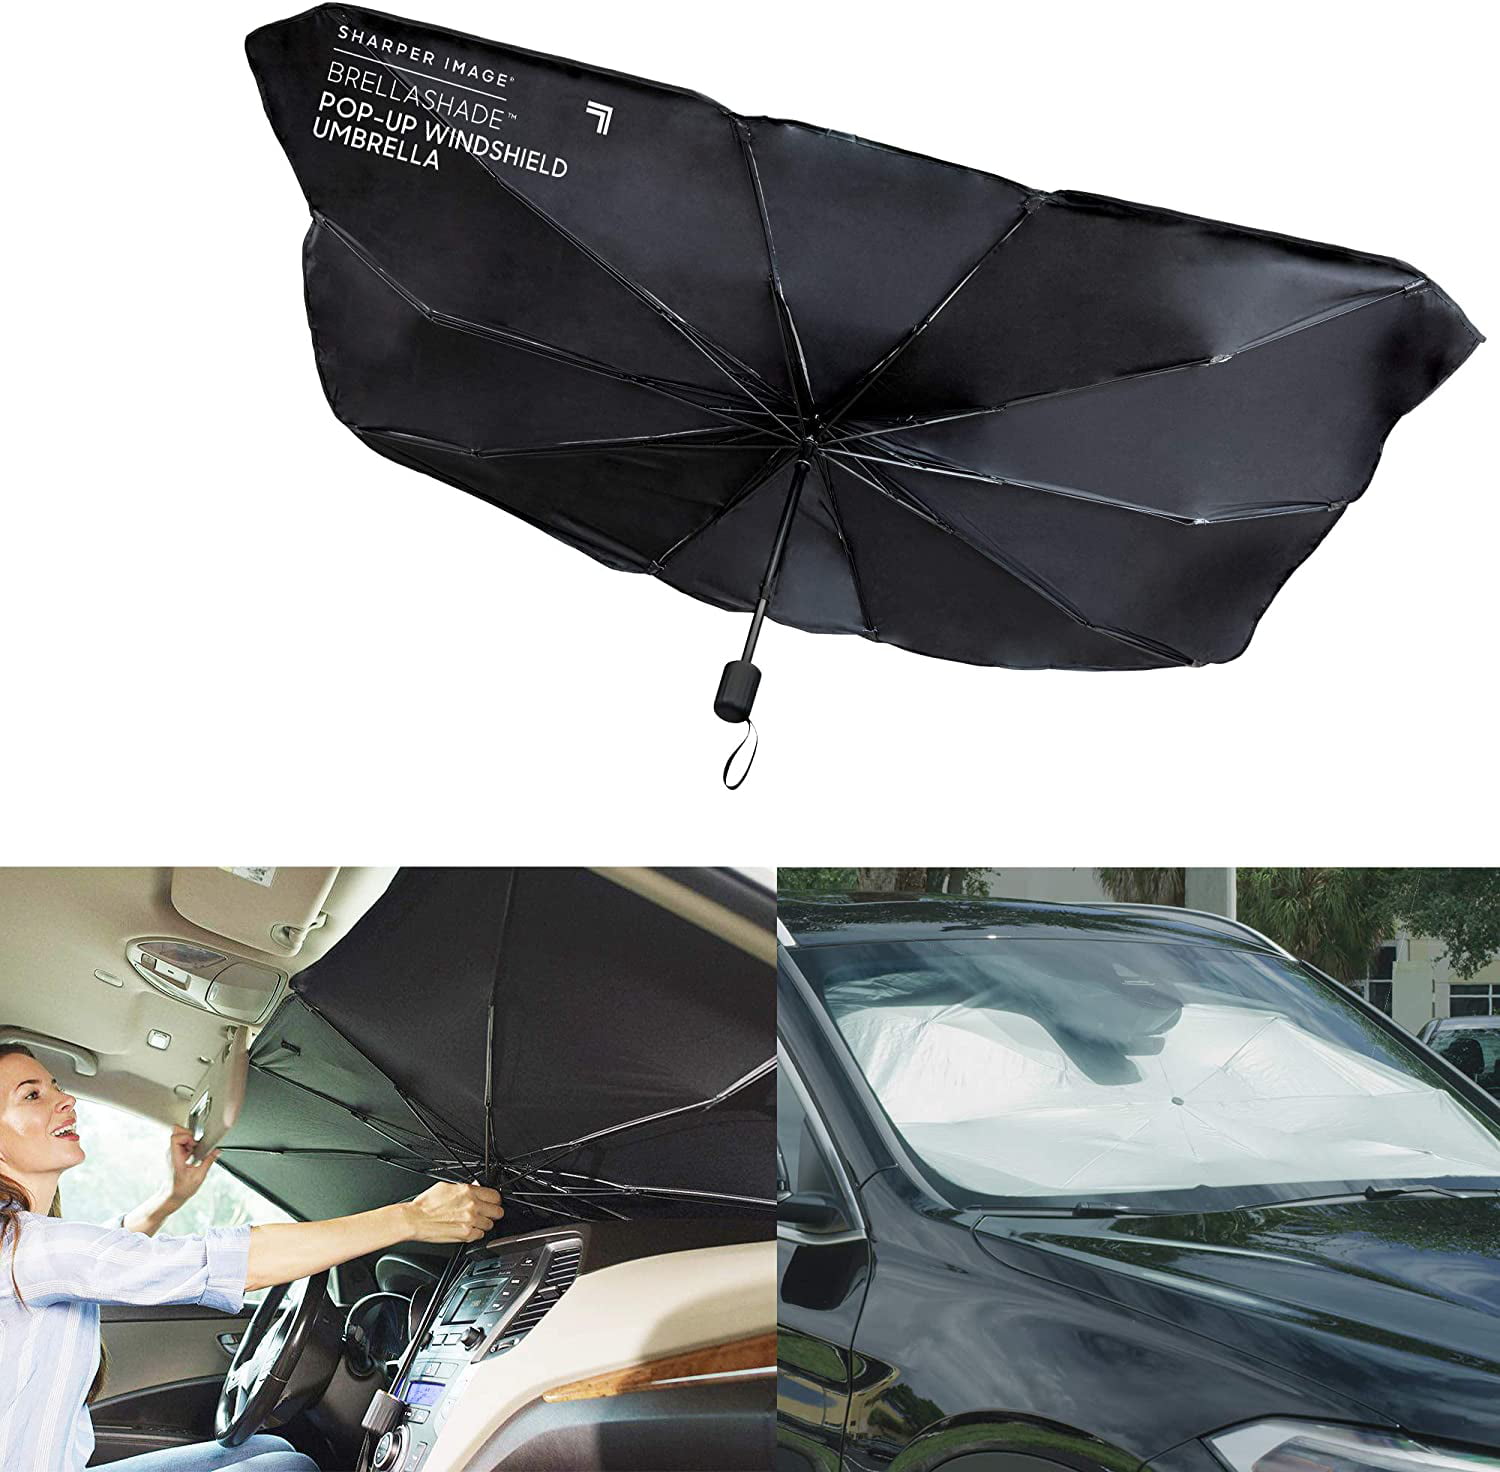 Sharper Image BrellaShade Pop-up Windshield Umbrella, Protects from UV Rays & Sun's Heat, Black